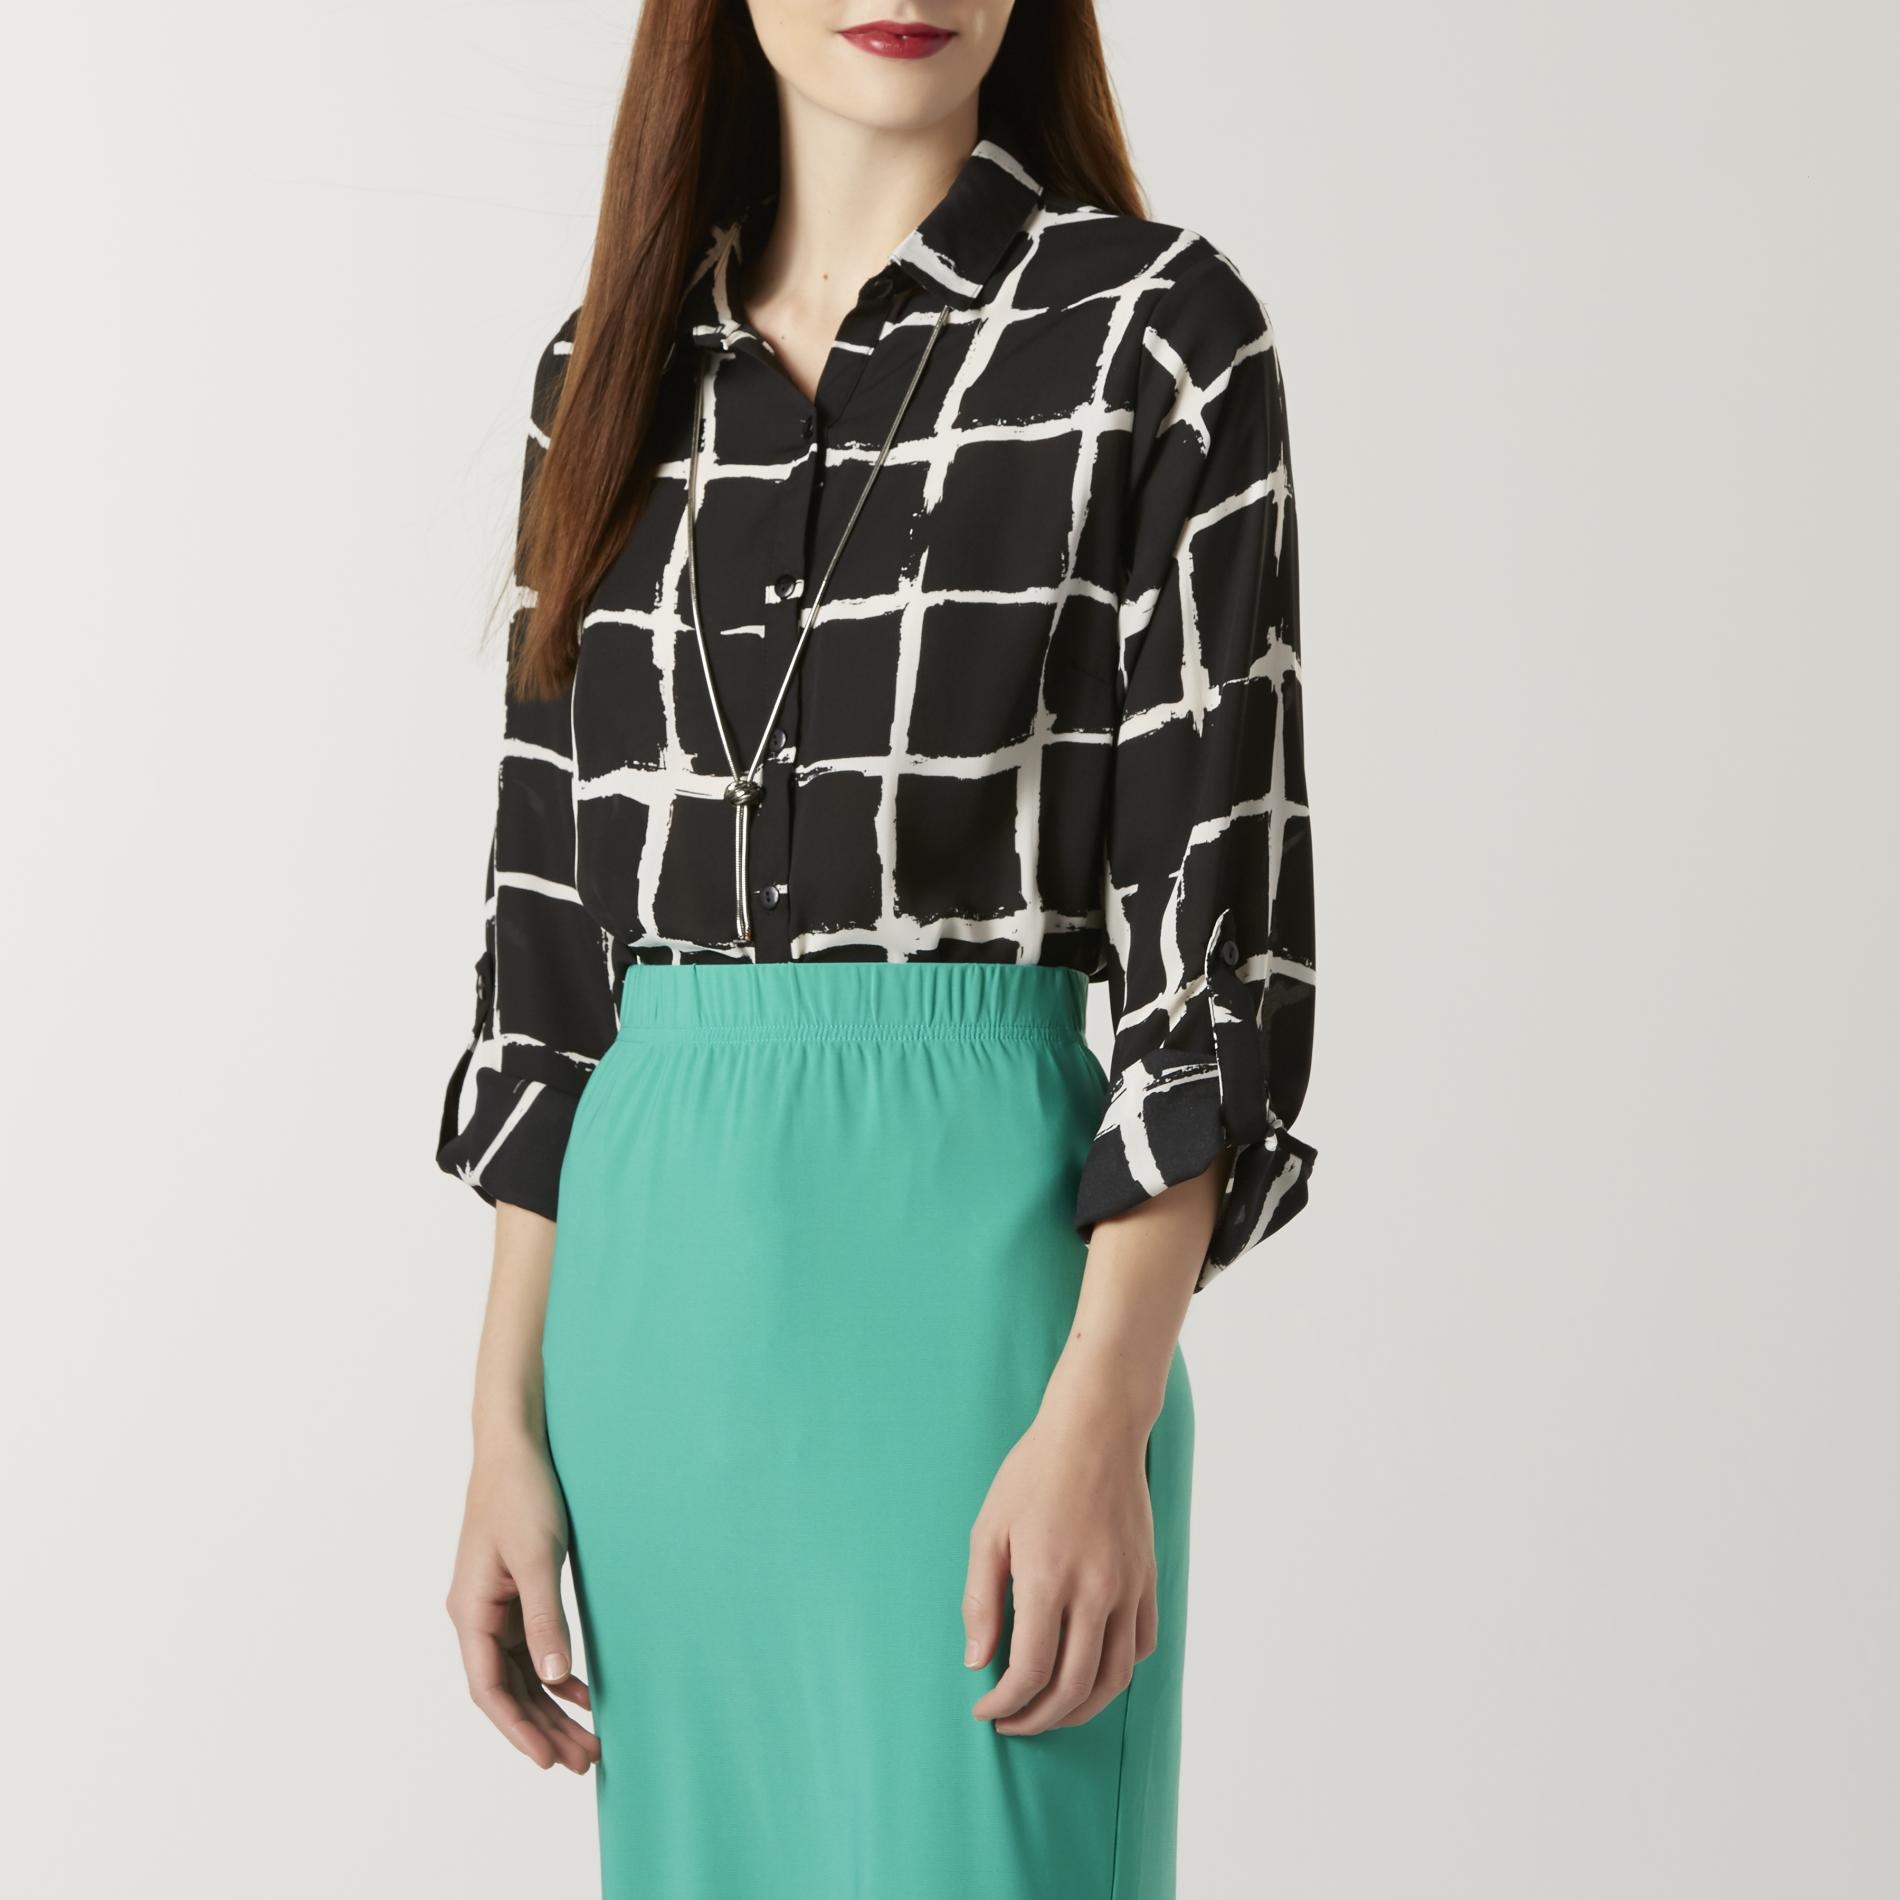 Simply Styled Women's Chiffon Blouse - Checkered